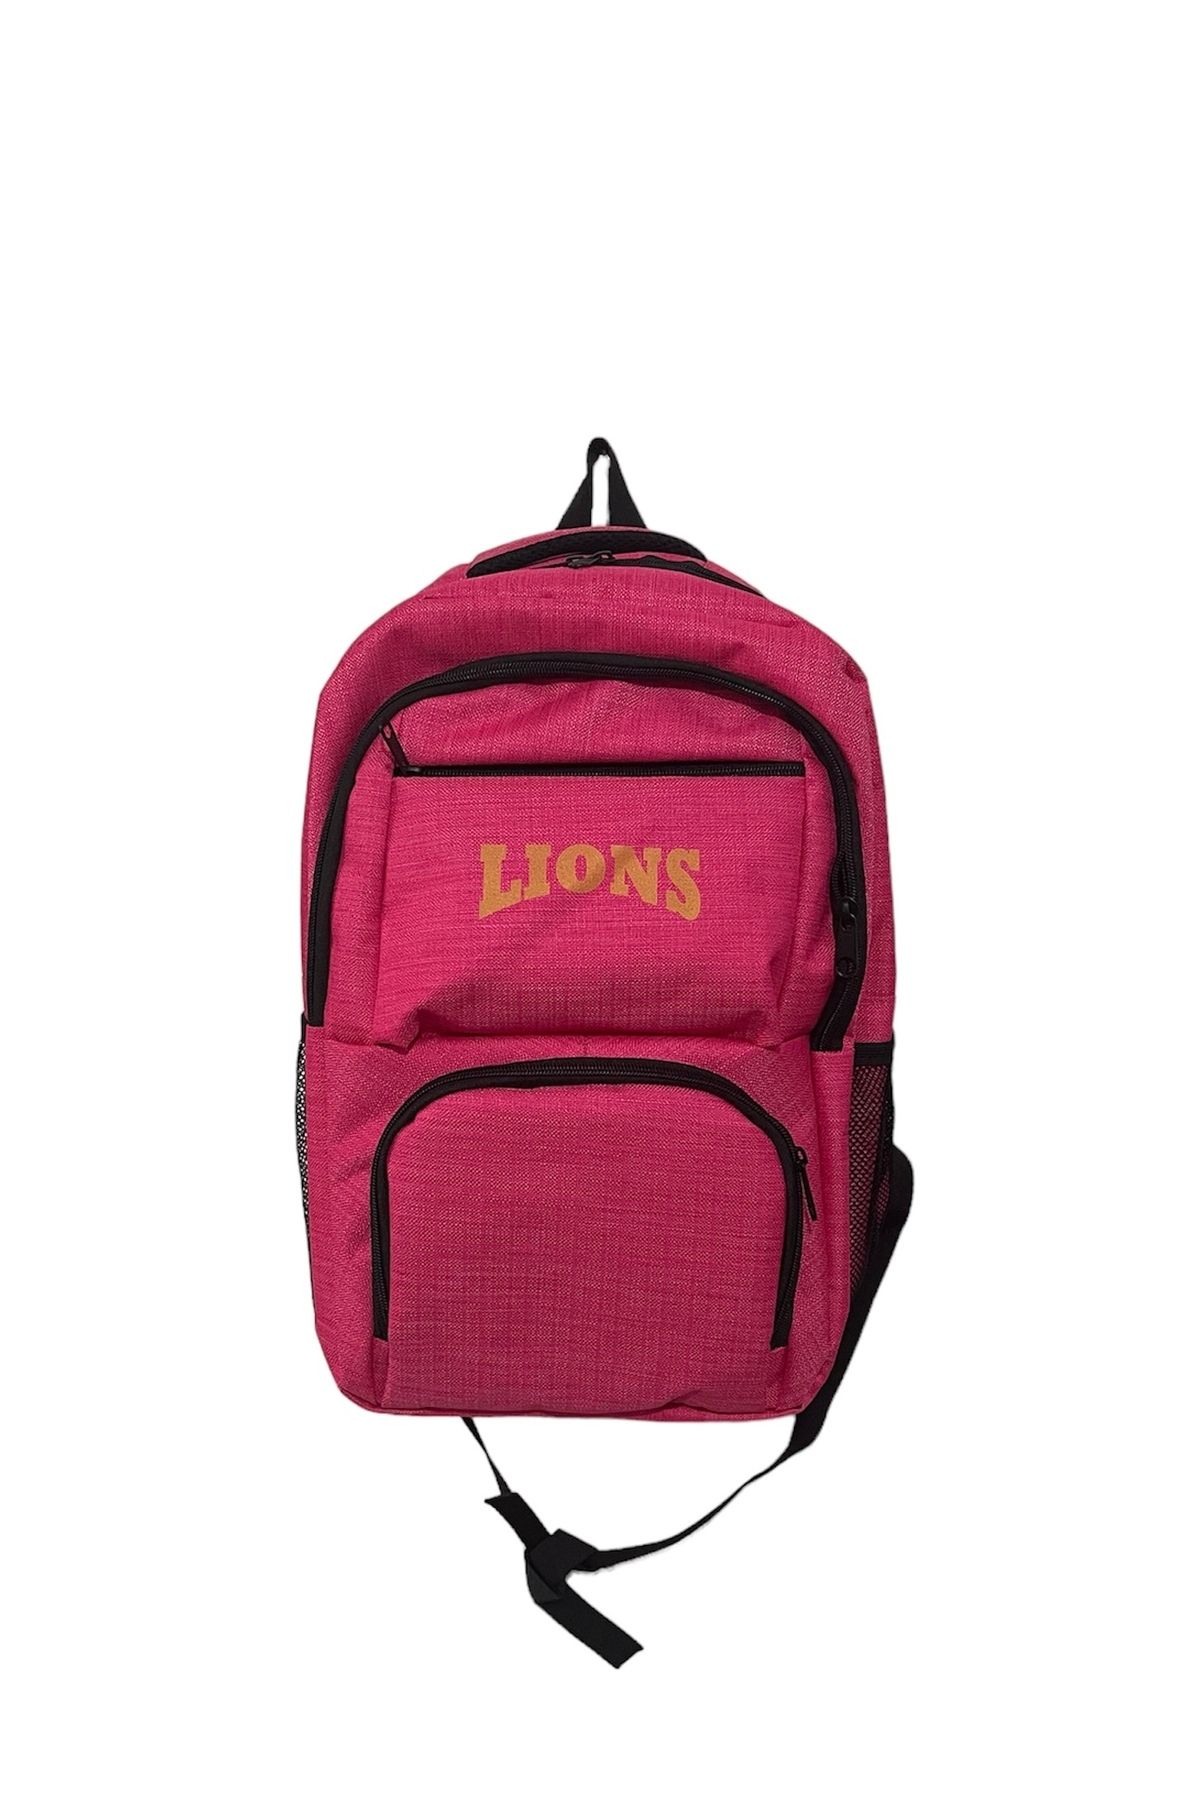 Lions sırt seyahat okul çantası